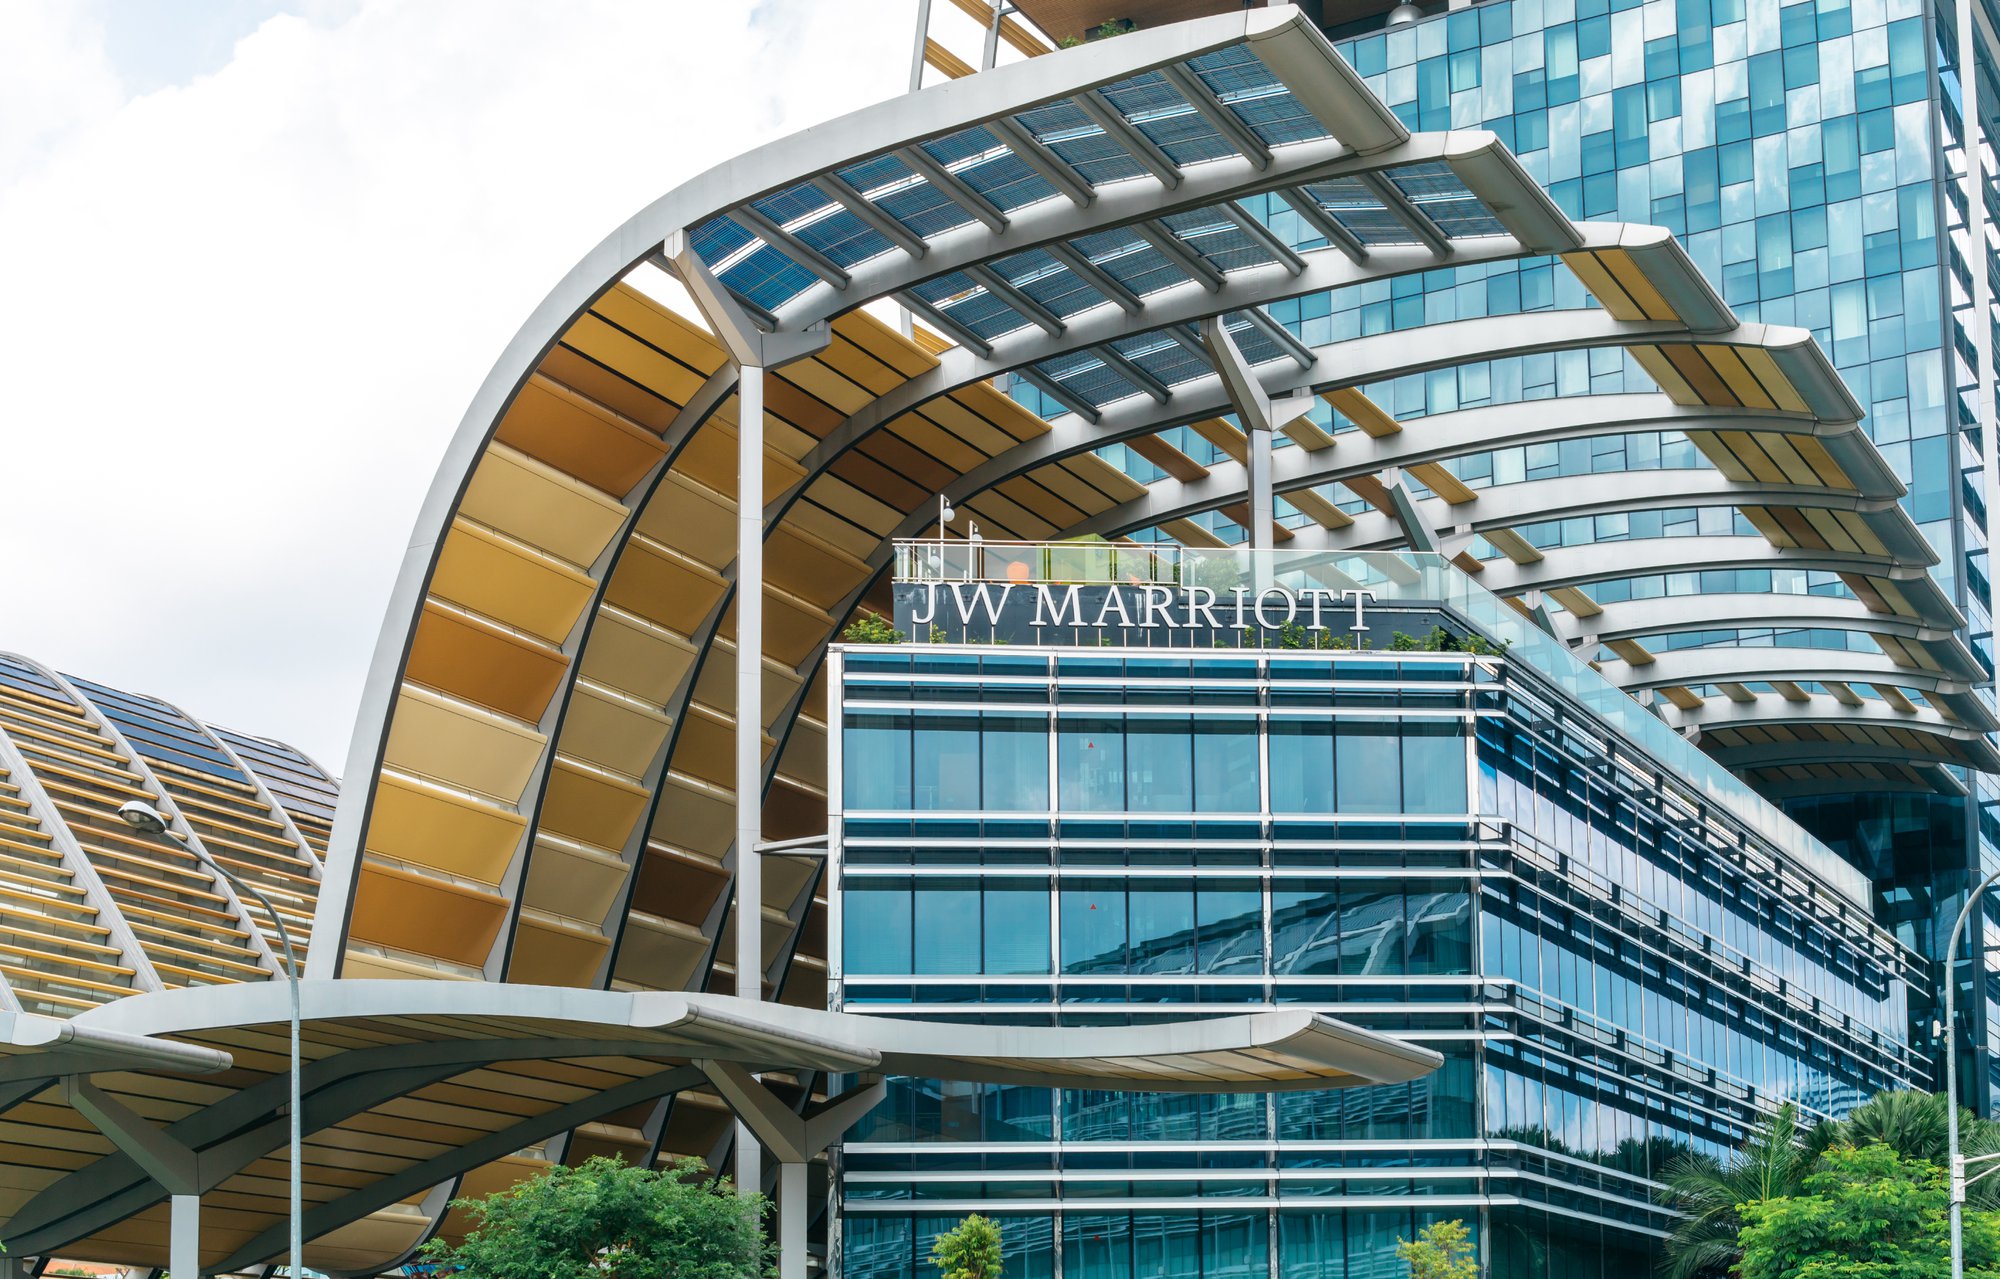 Image of JW Marriott Hotel Singapore South Beach